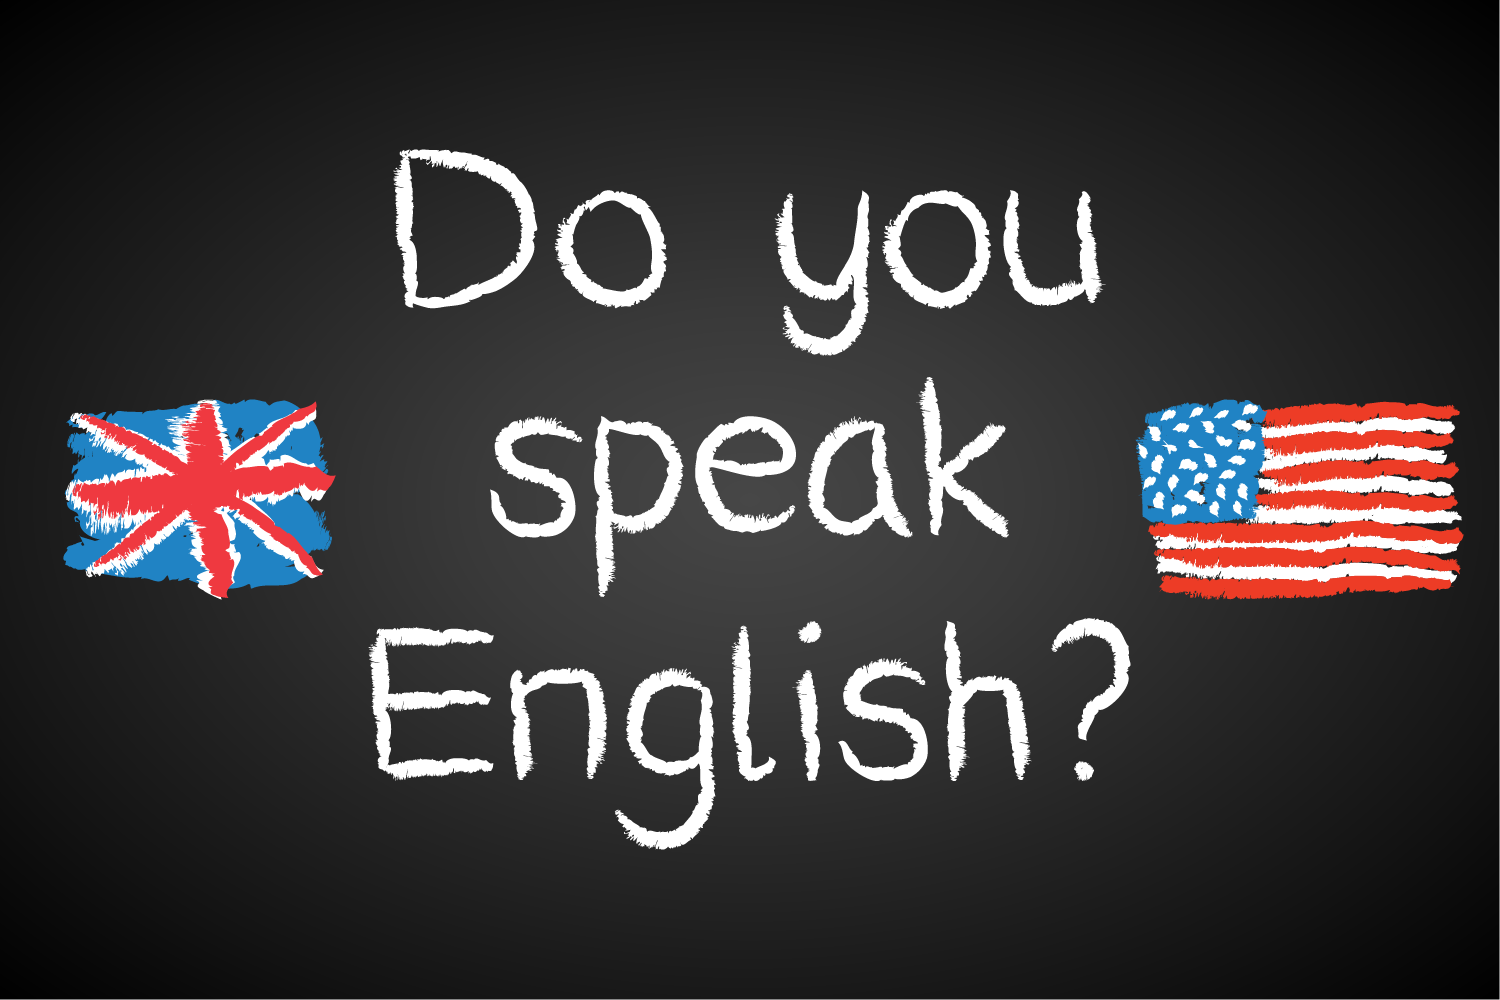 They to speak english now. Английский язык. Английский do you speak English. Do you speak English надпись. Плакат do you speak English.